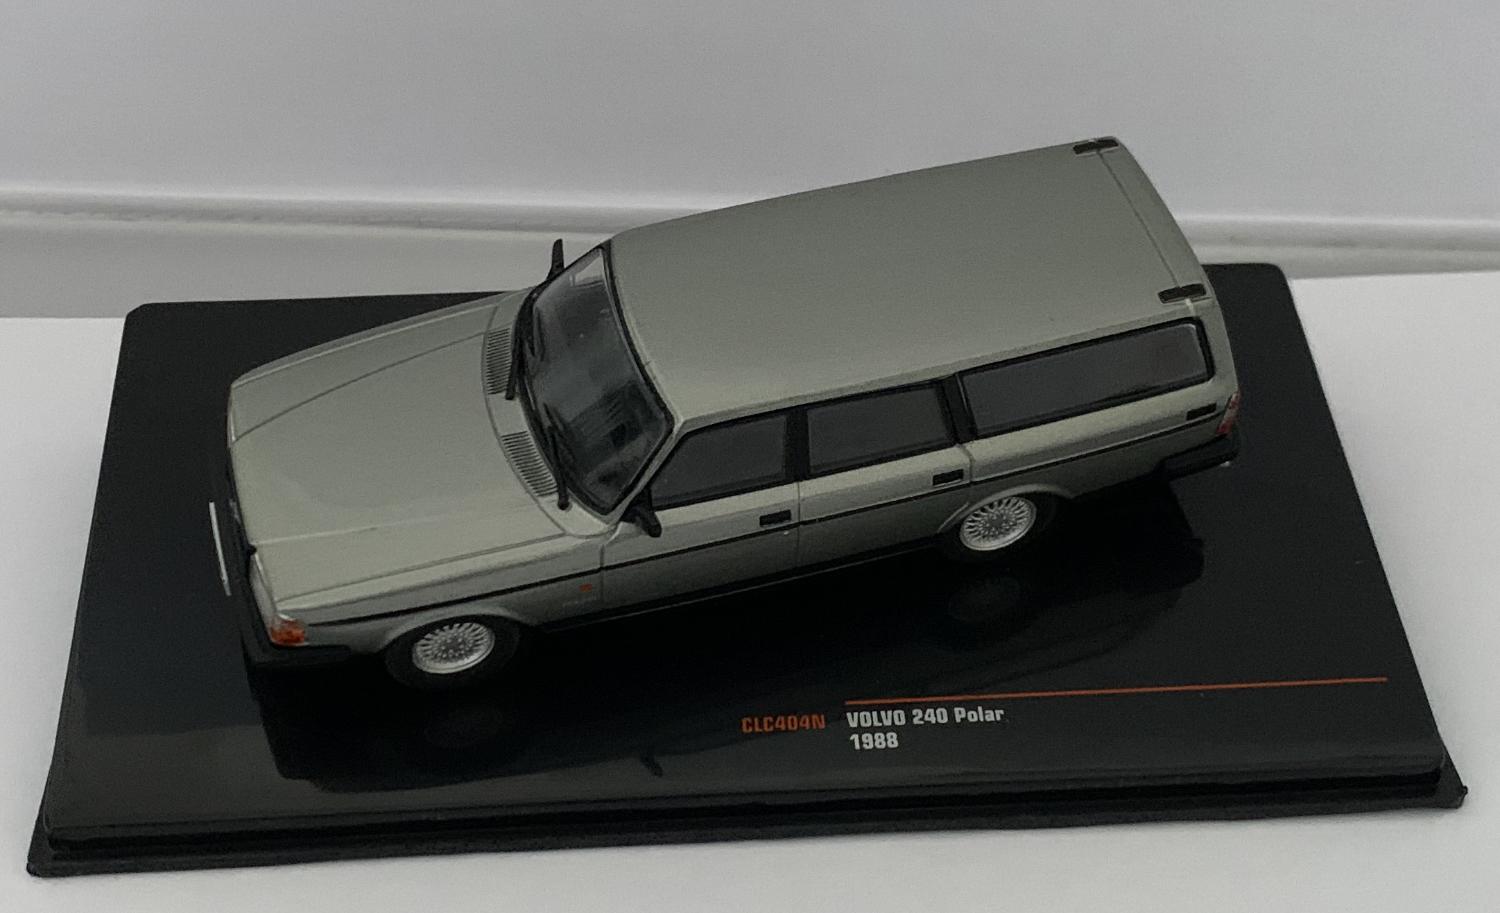 Volvo 240 Polar 1988 in metallic grey 1:43 scale diecast model car  from IXO